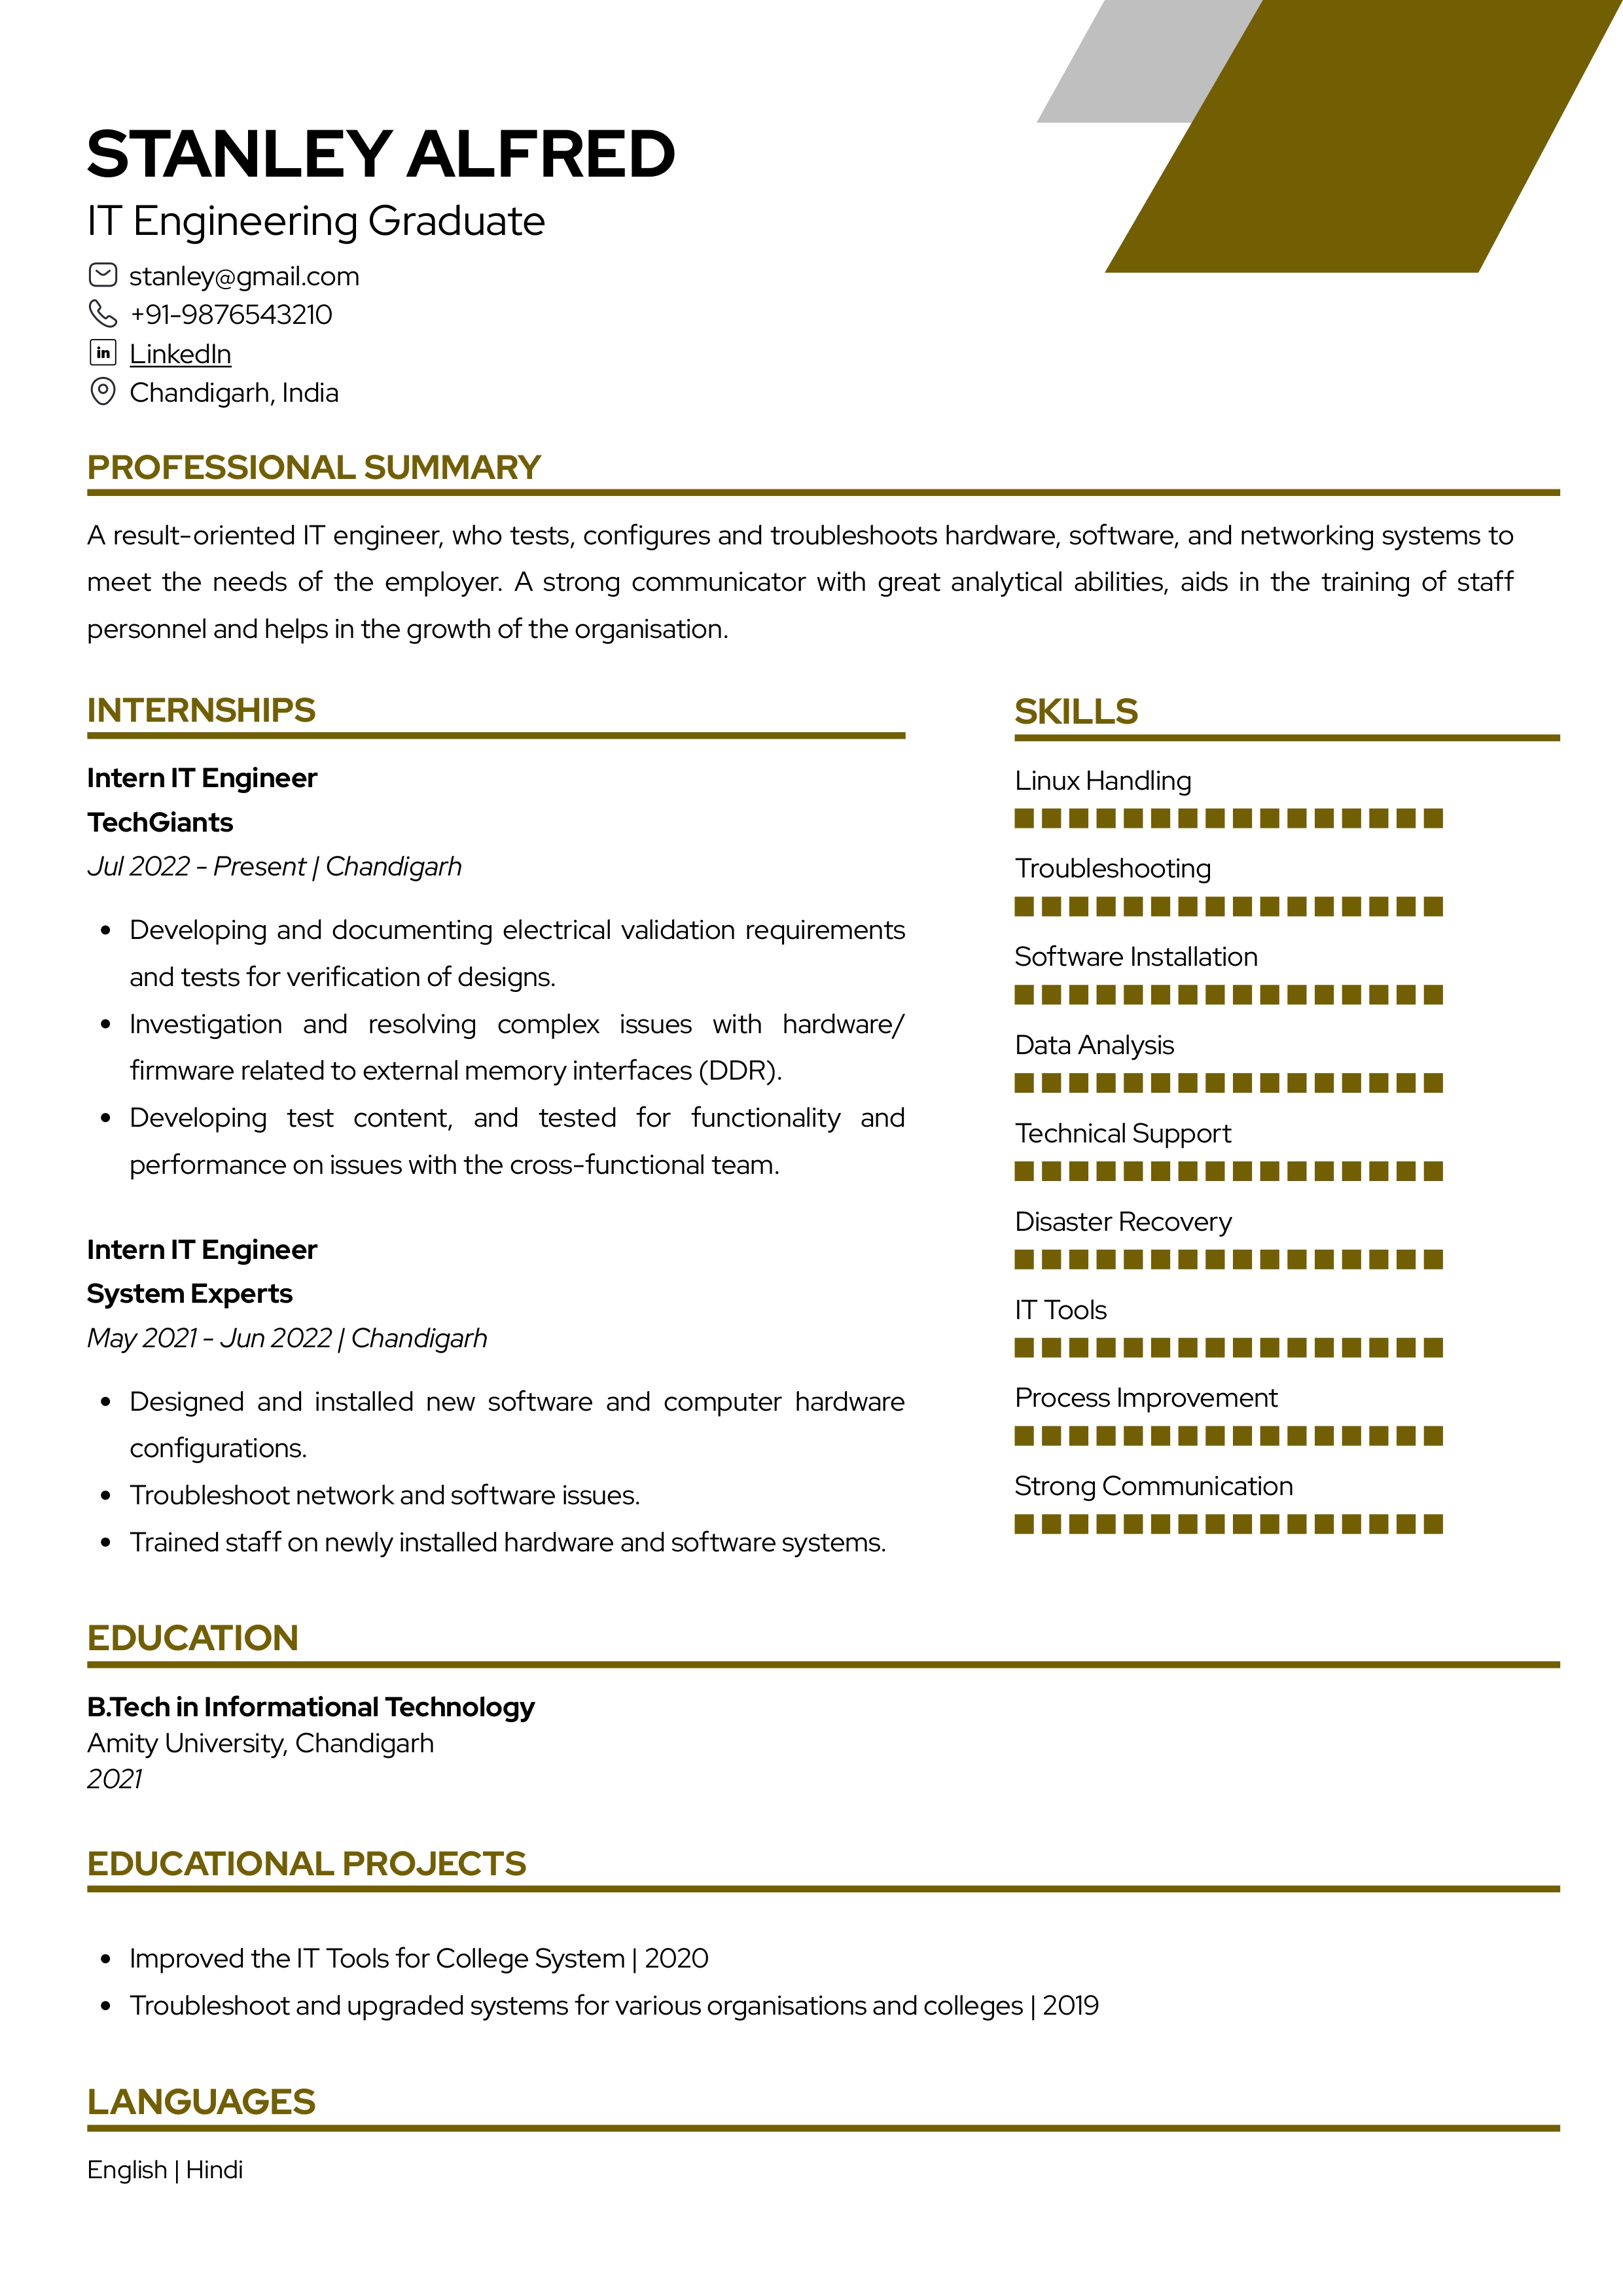 Sample Resume of IT Engineering Graduate | Free Resume Templates & Samples on Resumod.co